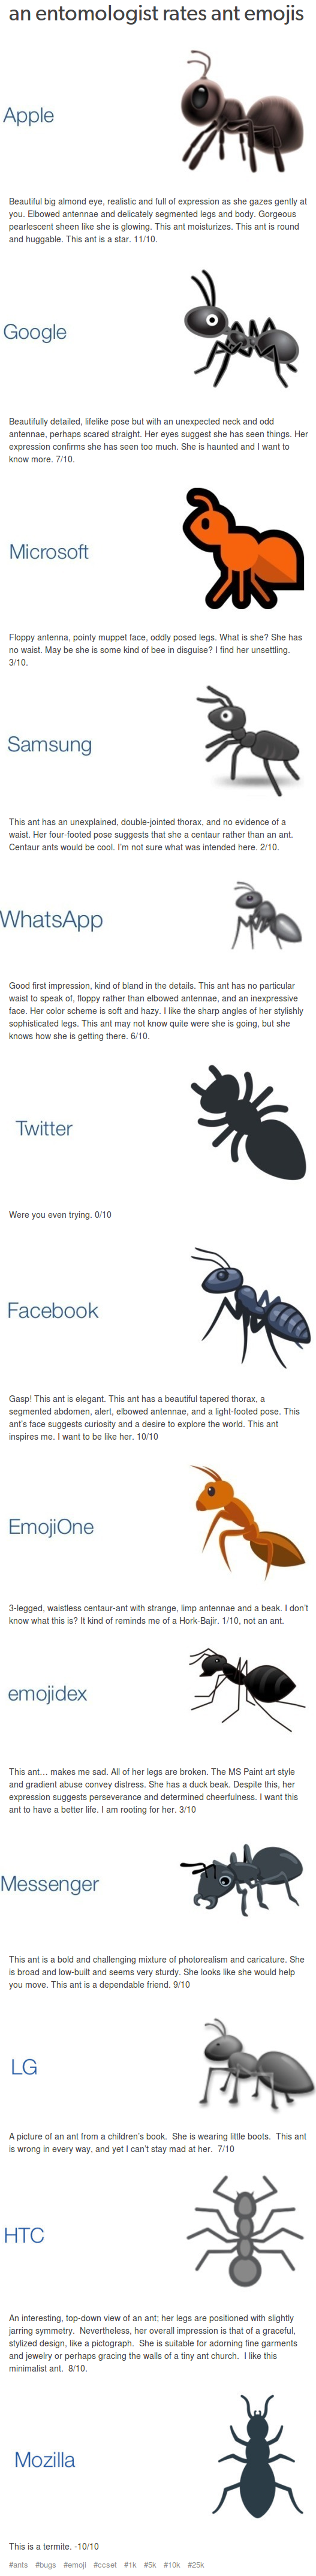 An entomologist rates the ant emojis